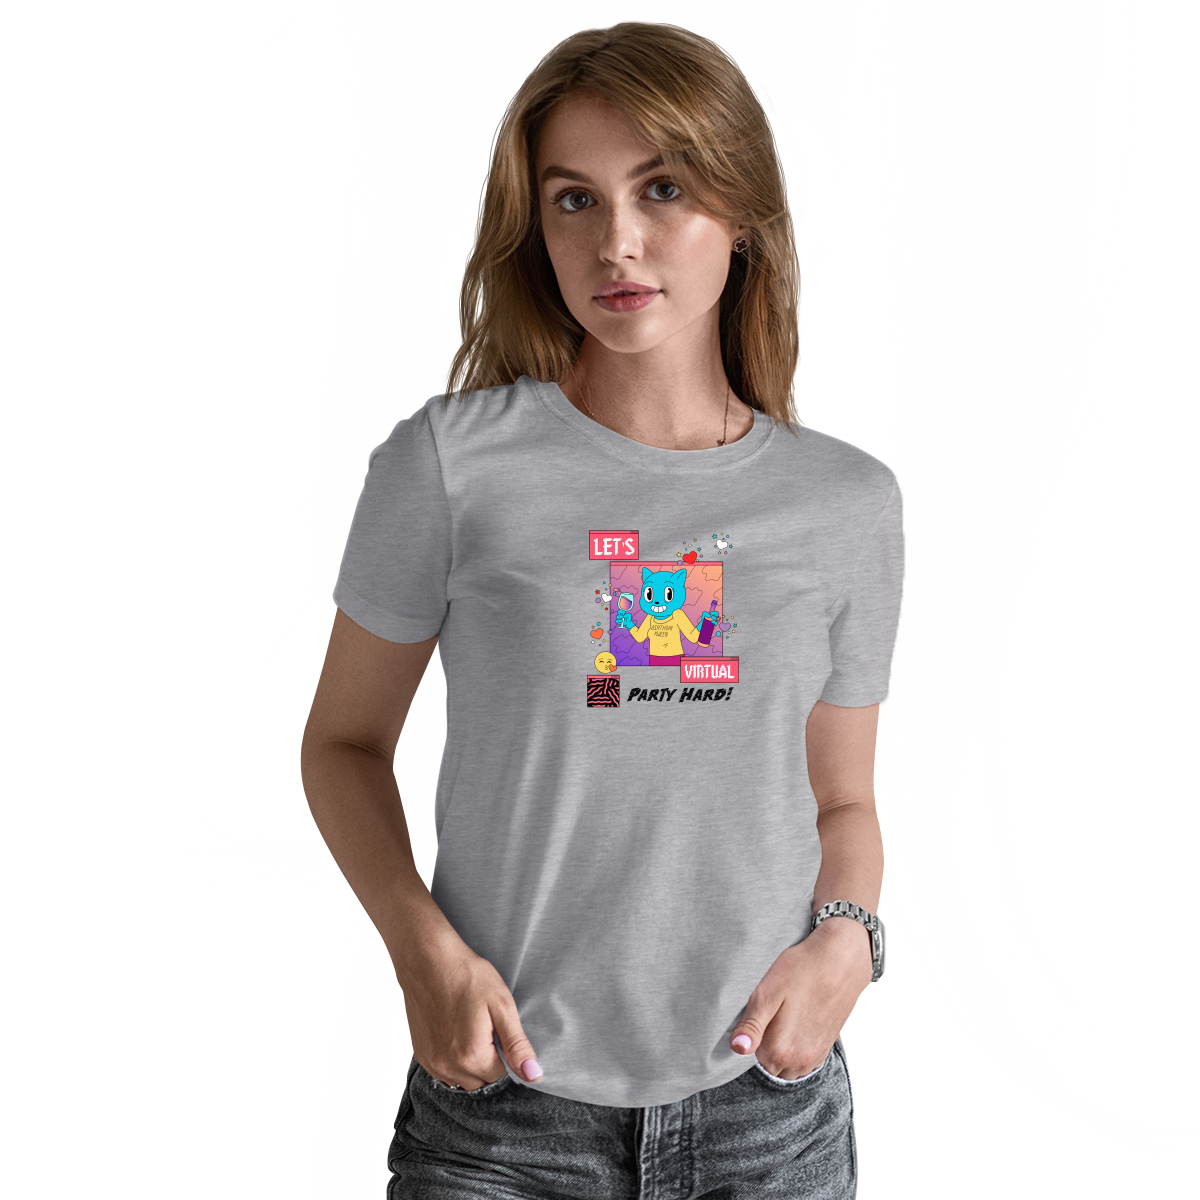 Let's Virtual Party Hard Women's T-shirt | Gray